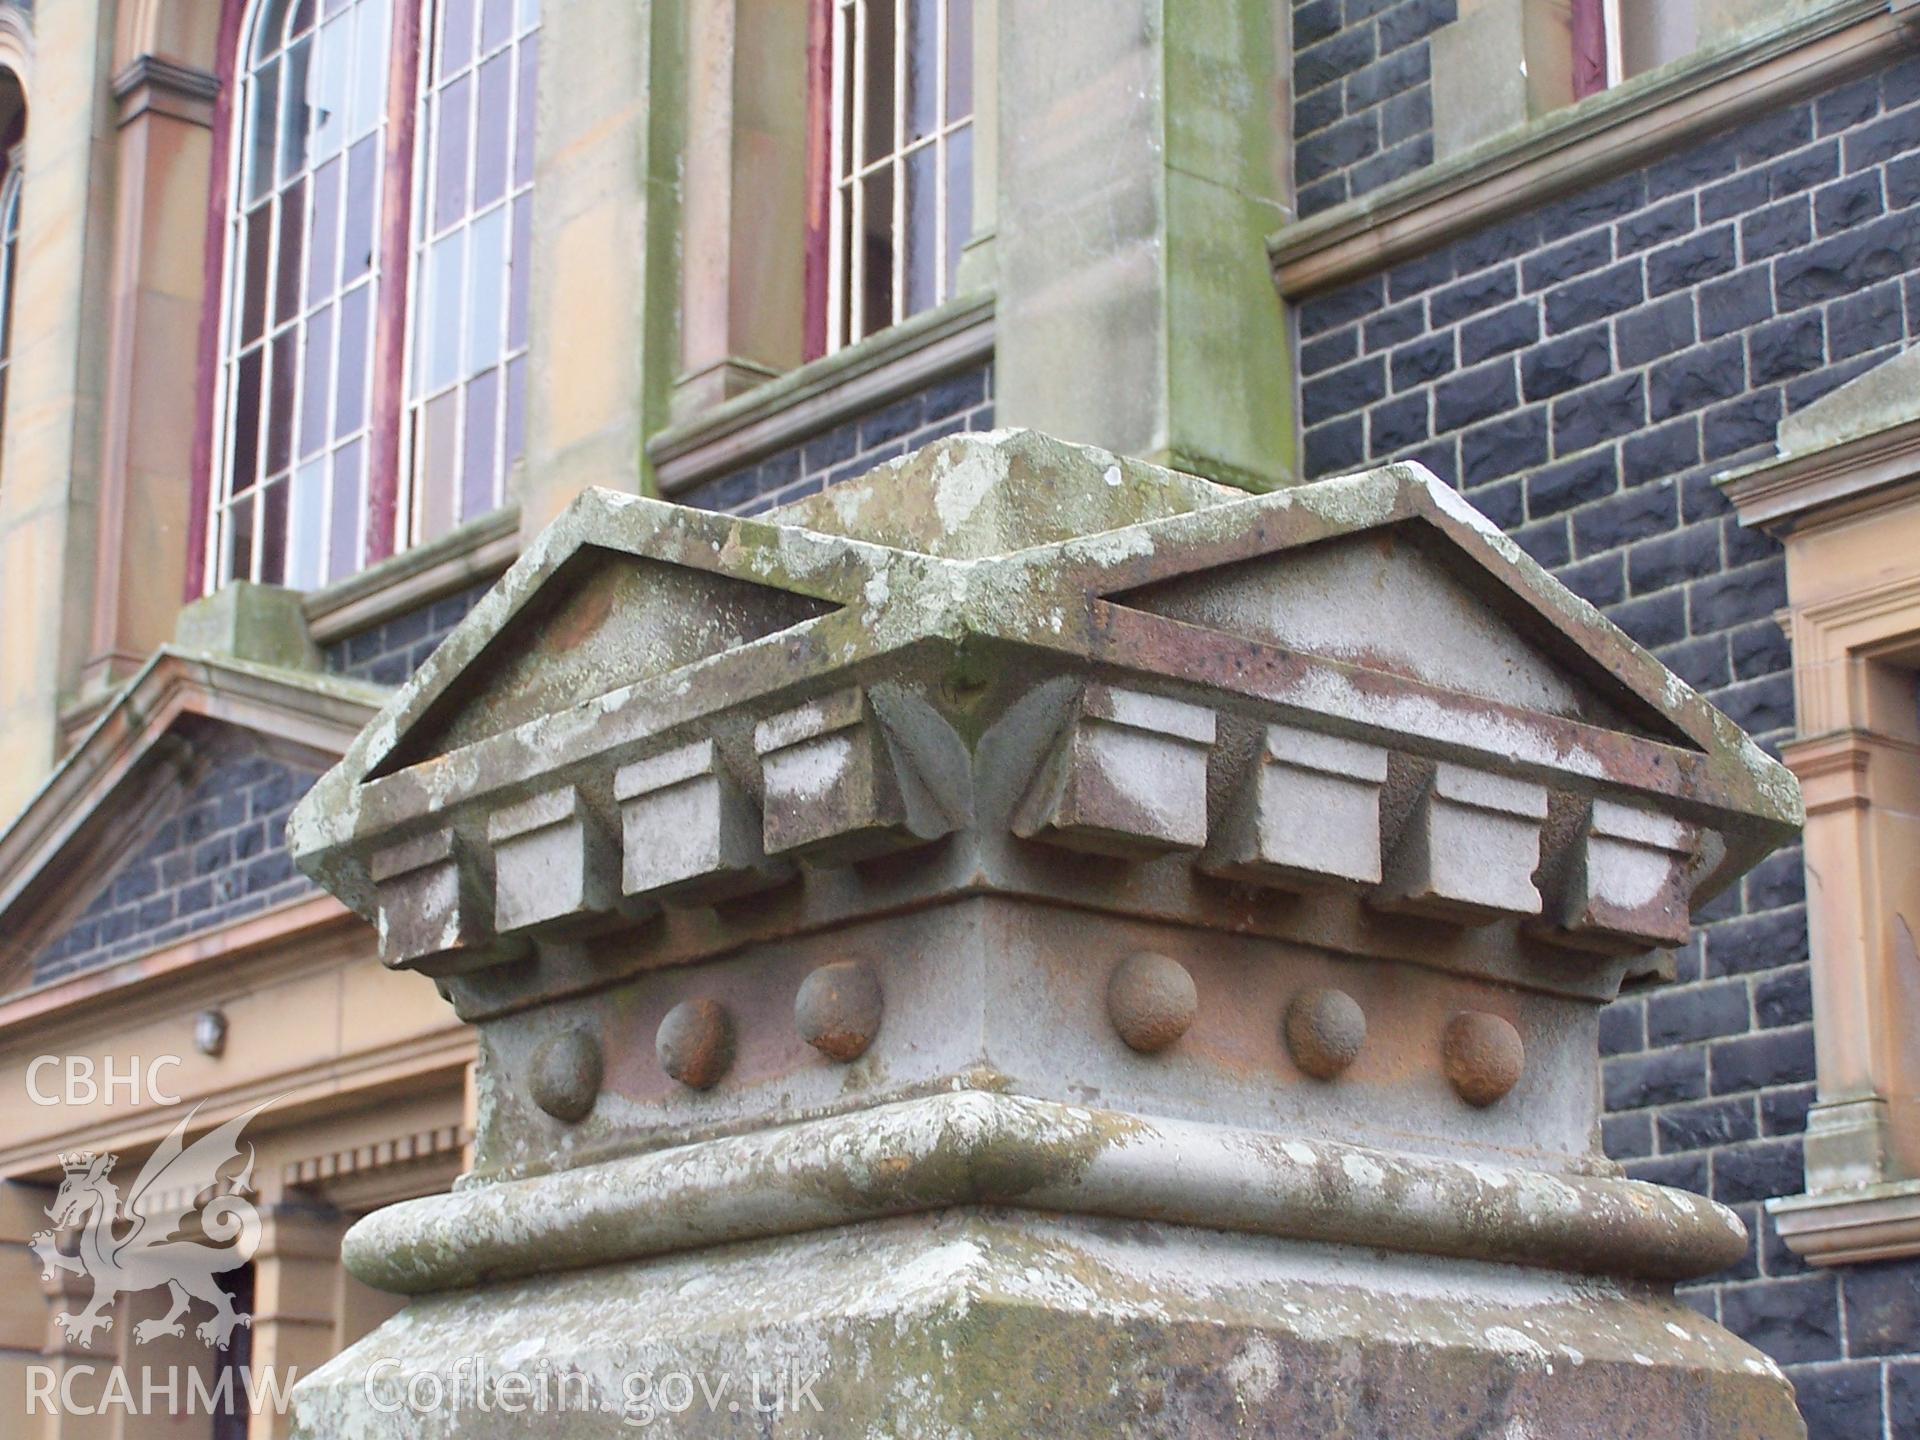 Chapel: Exterior - capstone on top of gate pillar.